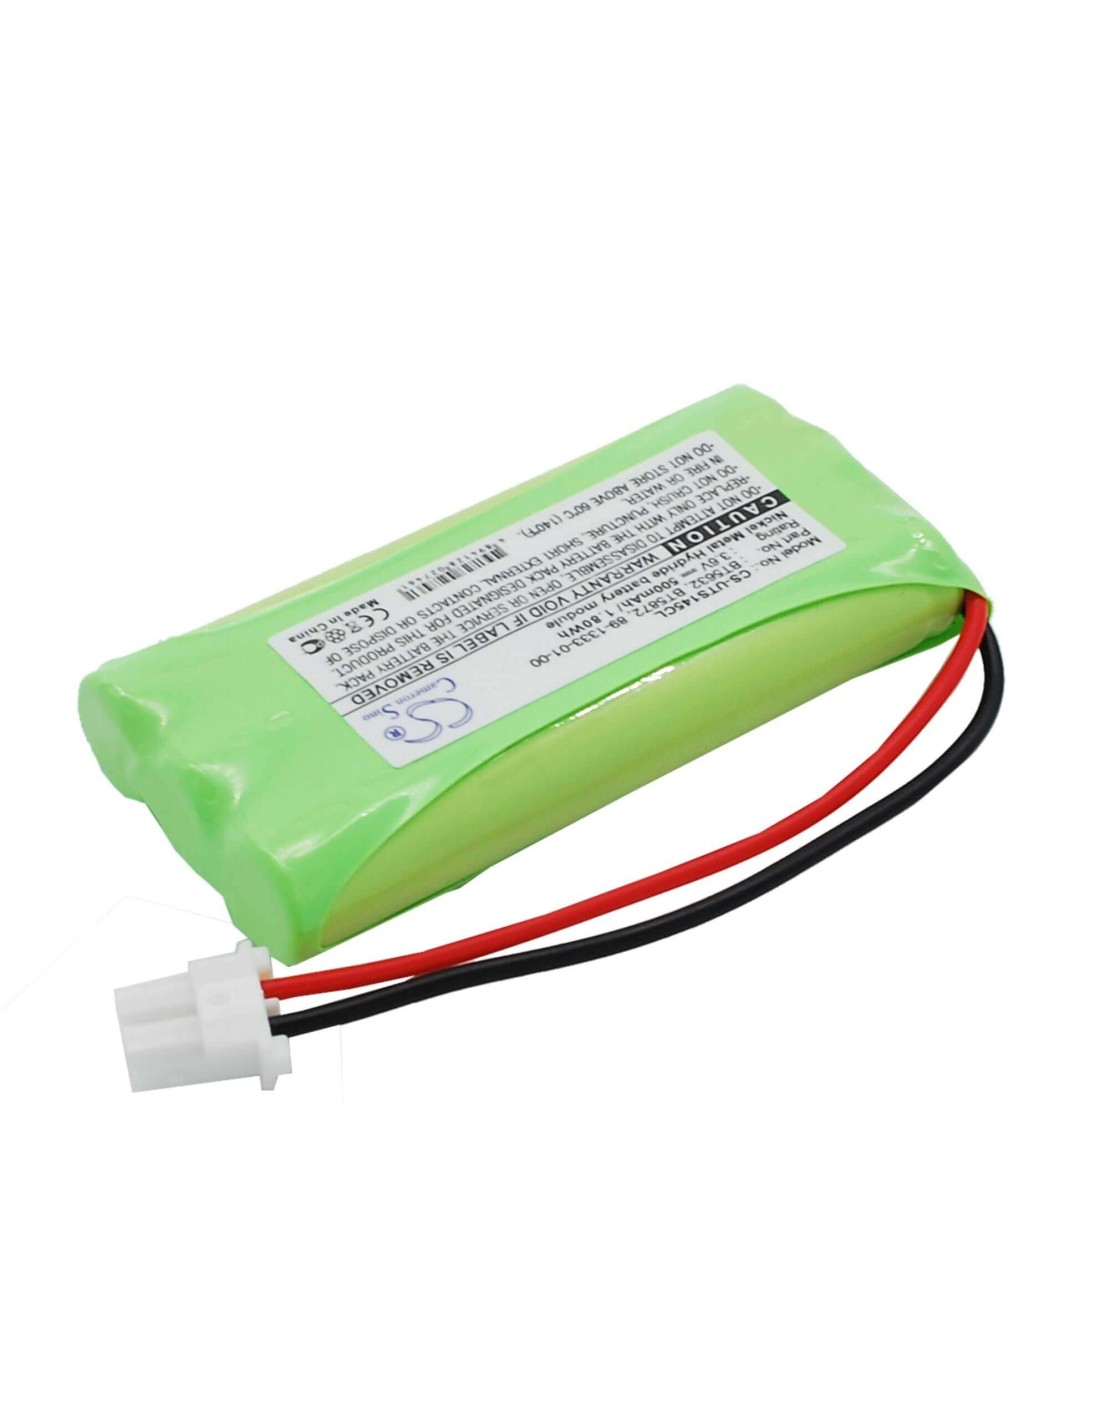 Battery for Uniden, 5105, 5145, 5146, Ls5105, 3.6V, 500mAh - 1.80Wh